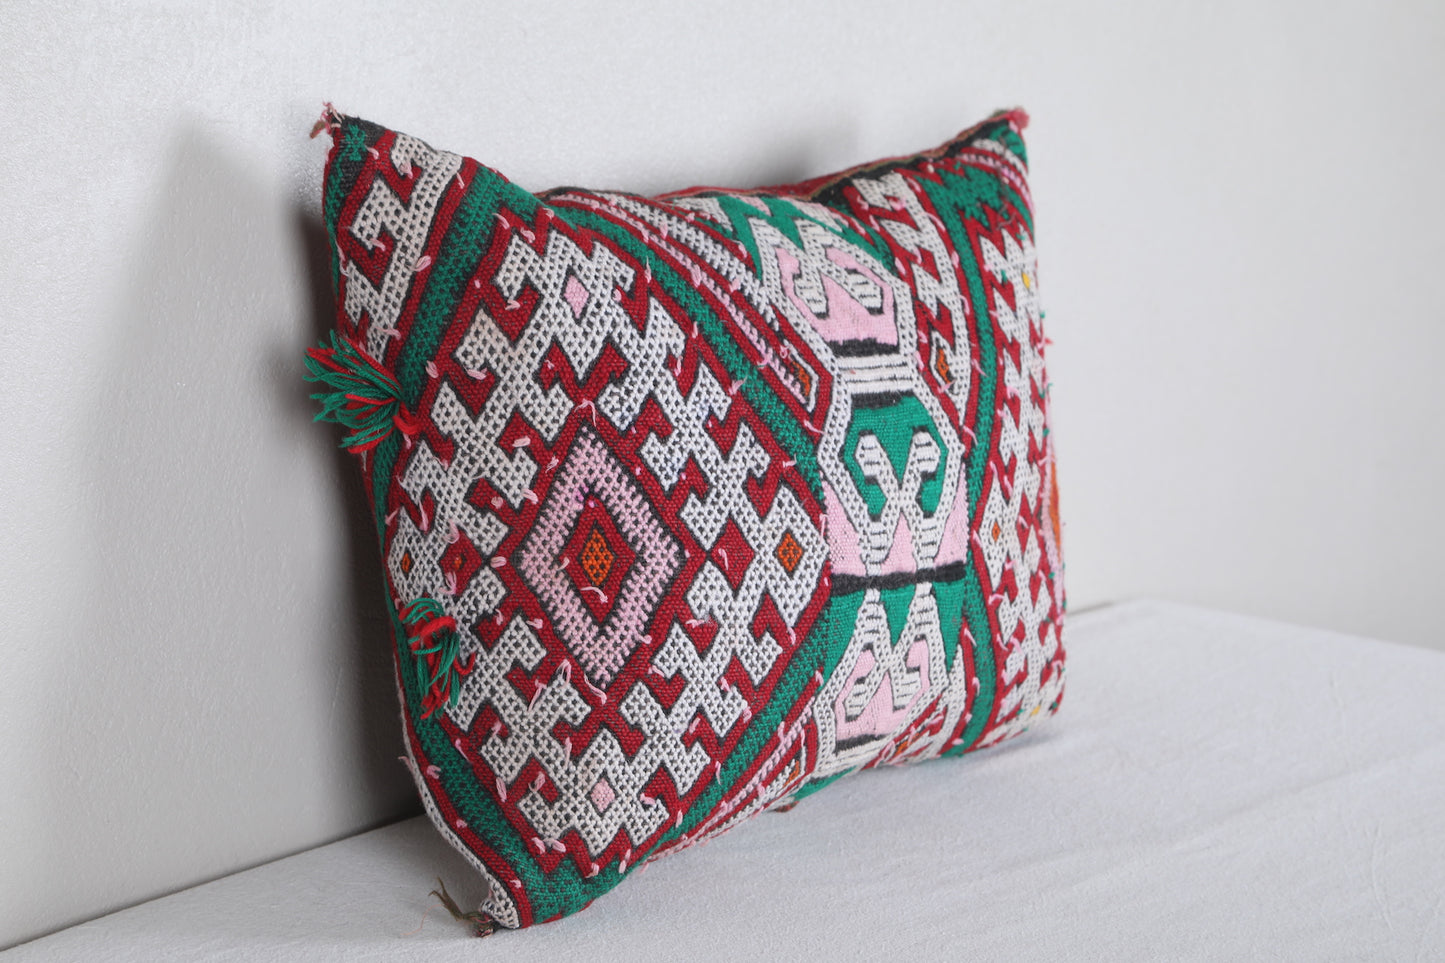 handmade kilim pillow 15.7 INCHES X 21.2 INCHES